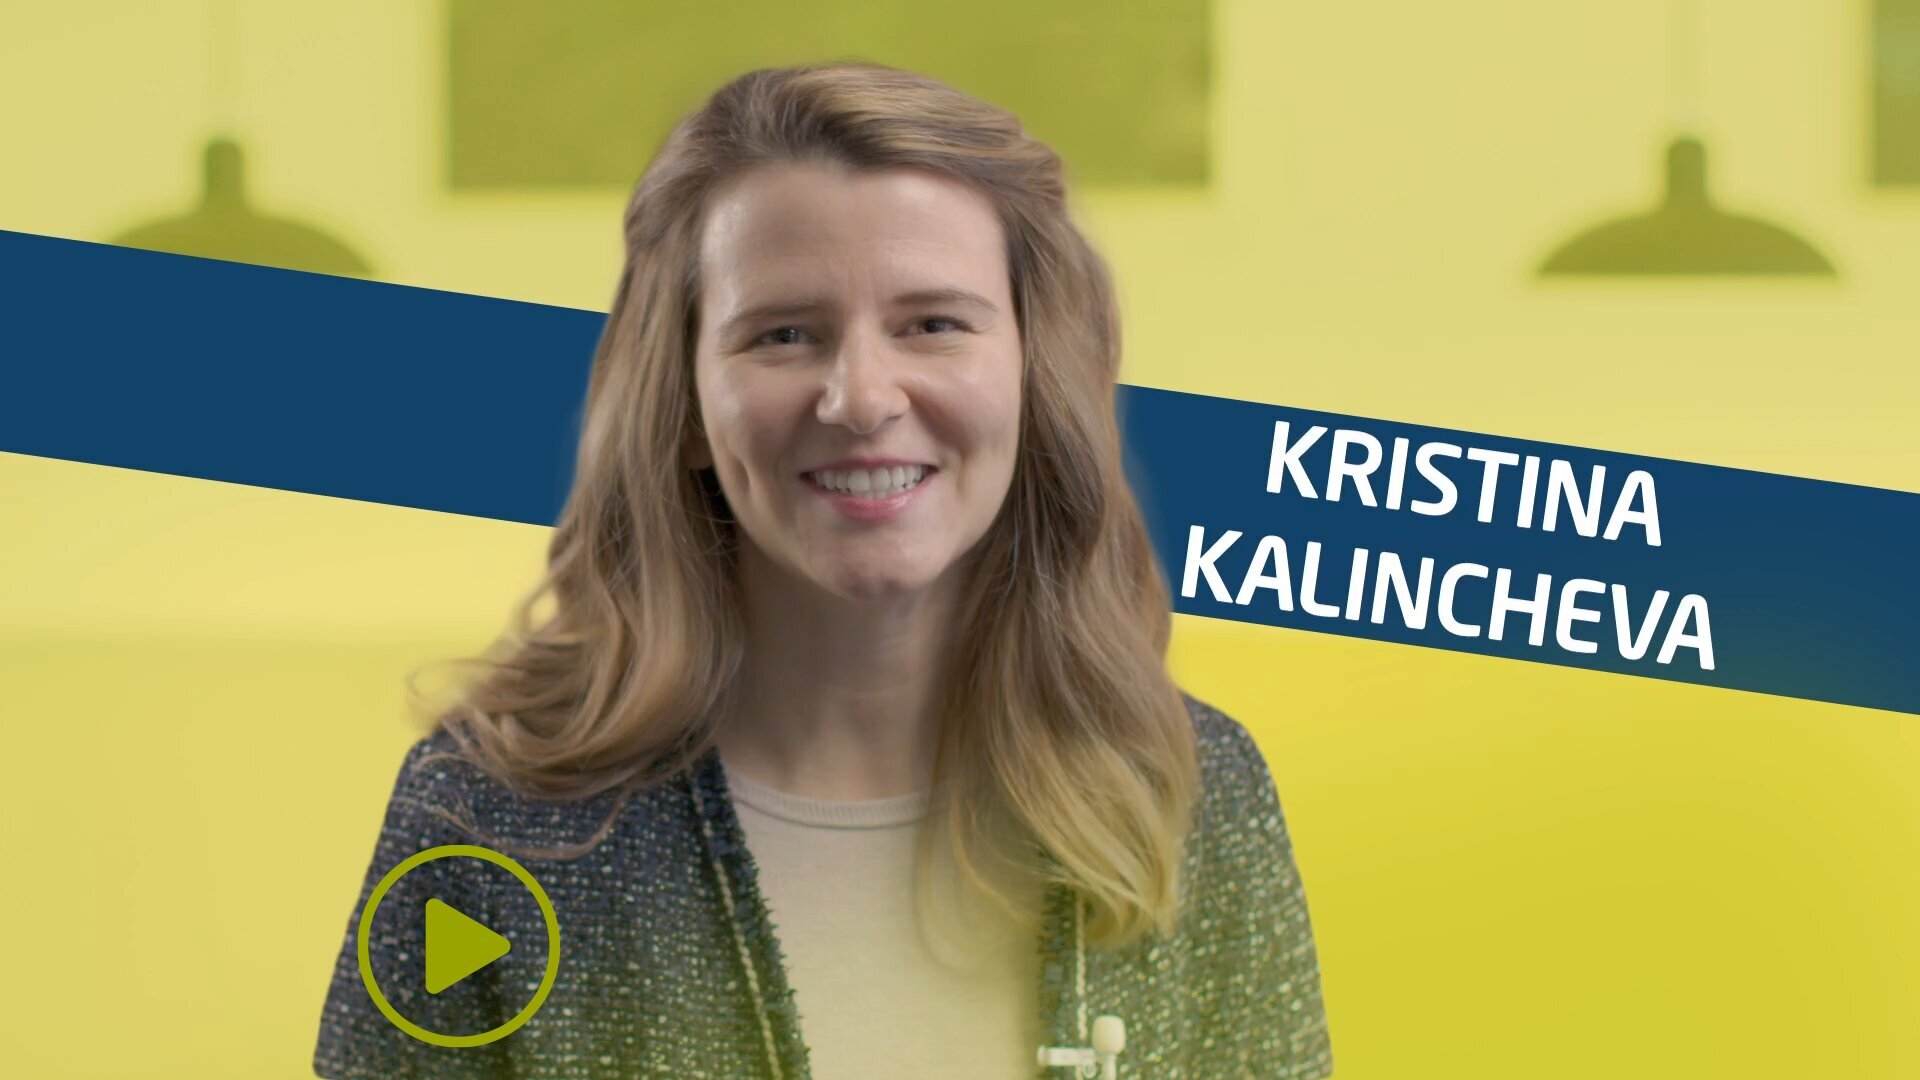 Kristina Kalincheva, a Global Graduate Trainee Program graduate talks about his experience in a video